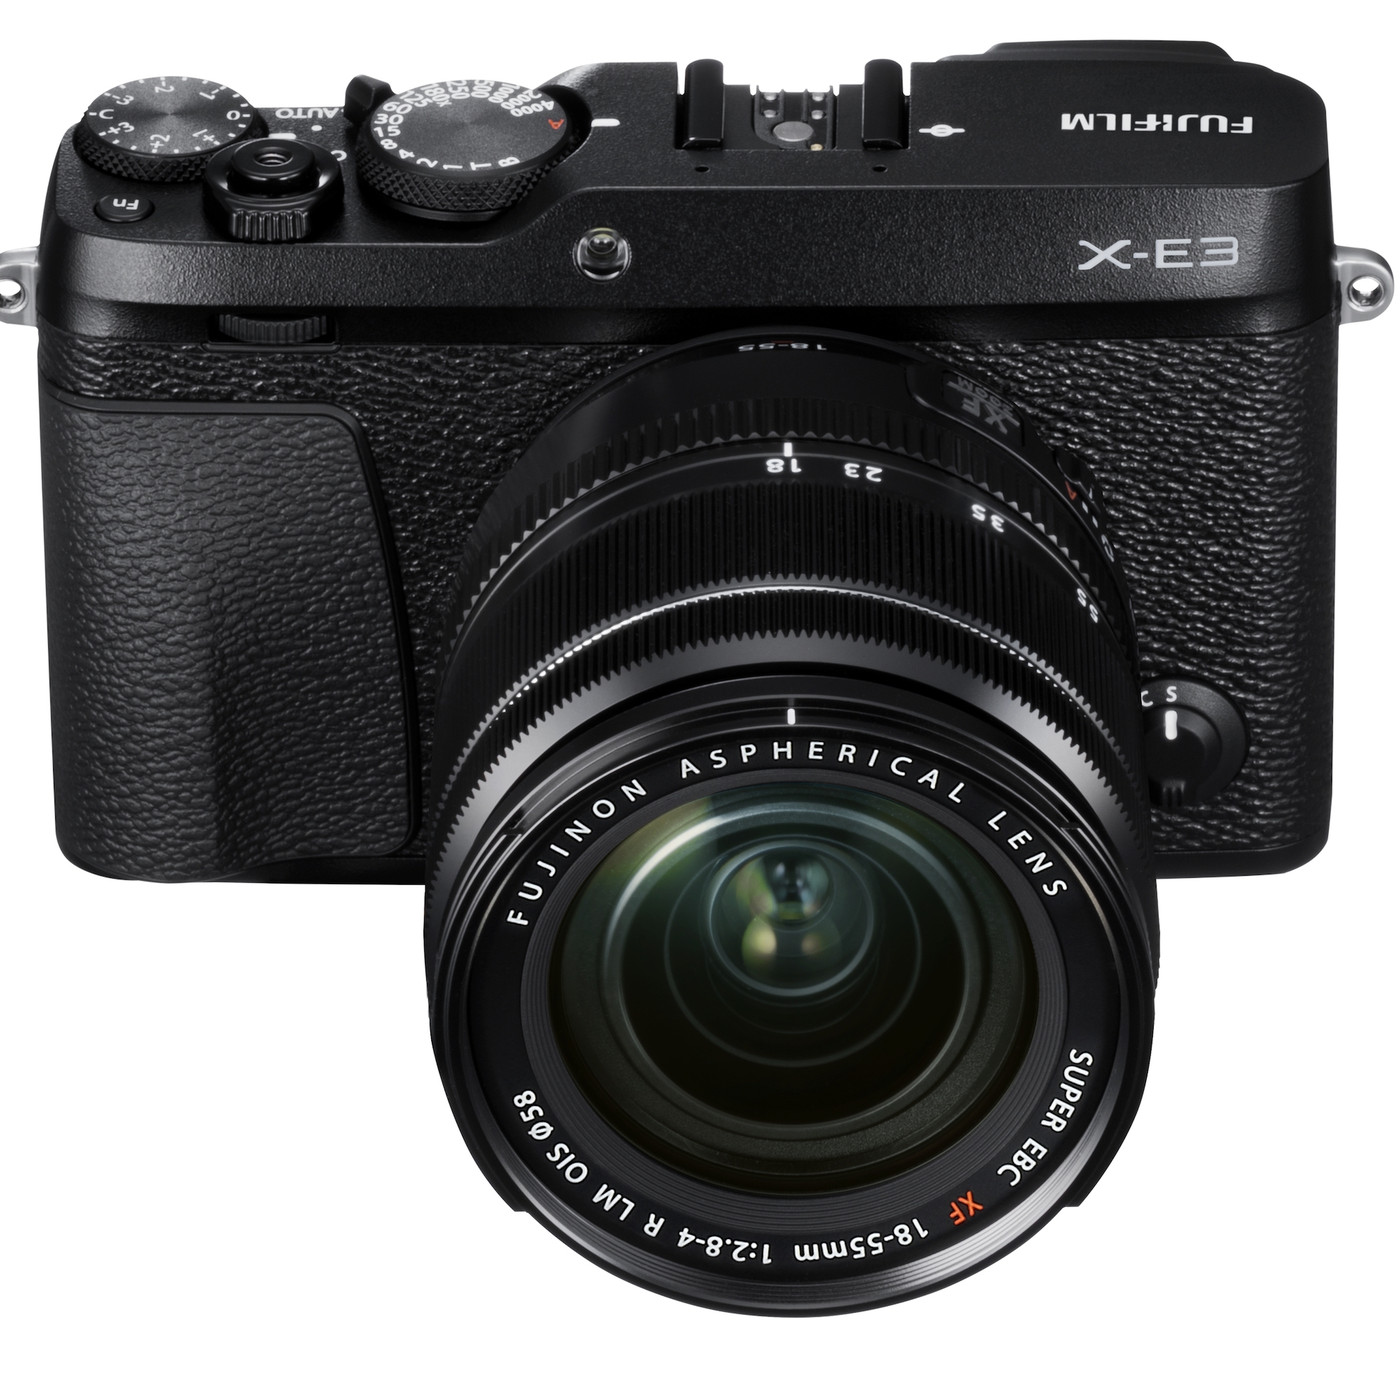 Fujifilm announces X-E3 mirrorless camera - Verge